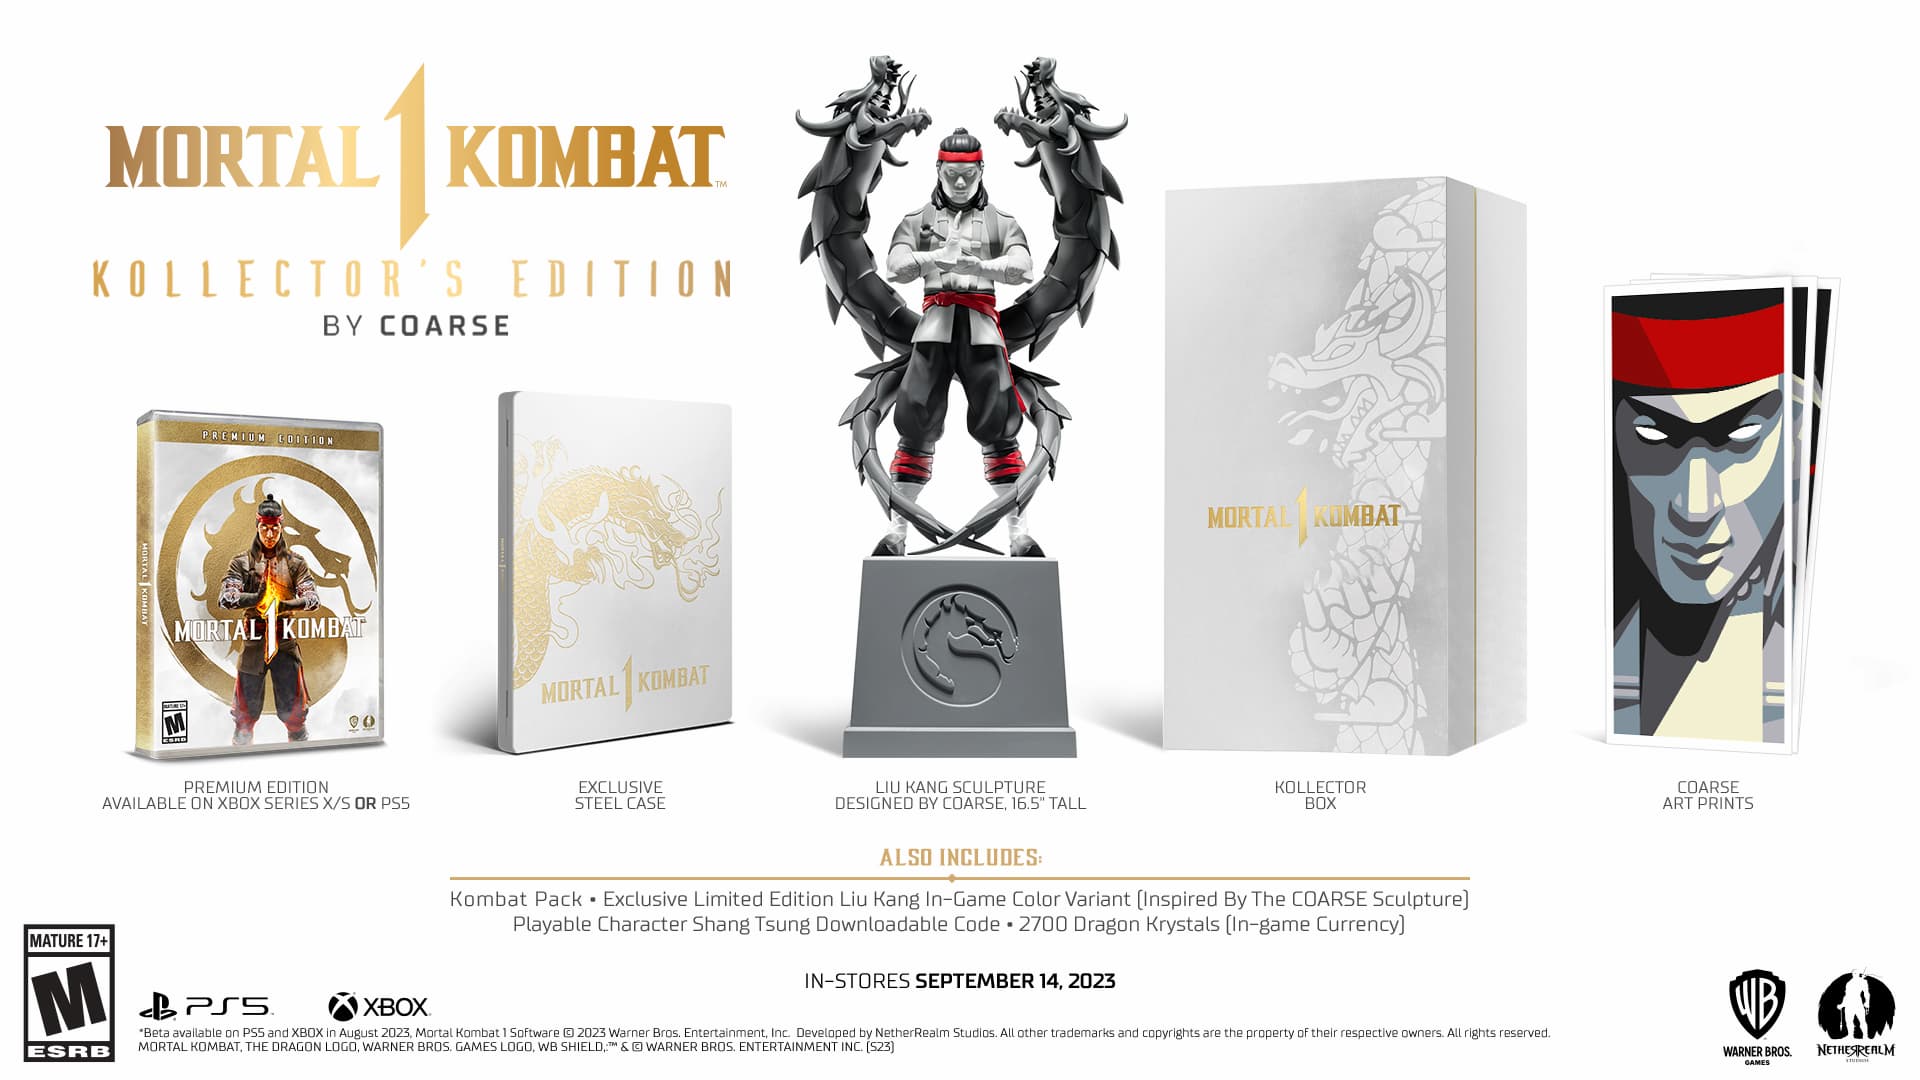 Mortal Kombat 1 anunciado para setembro